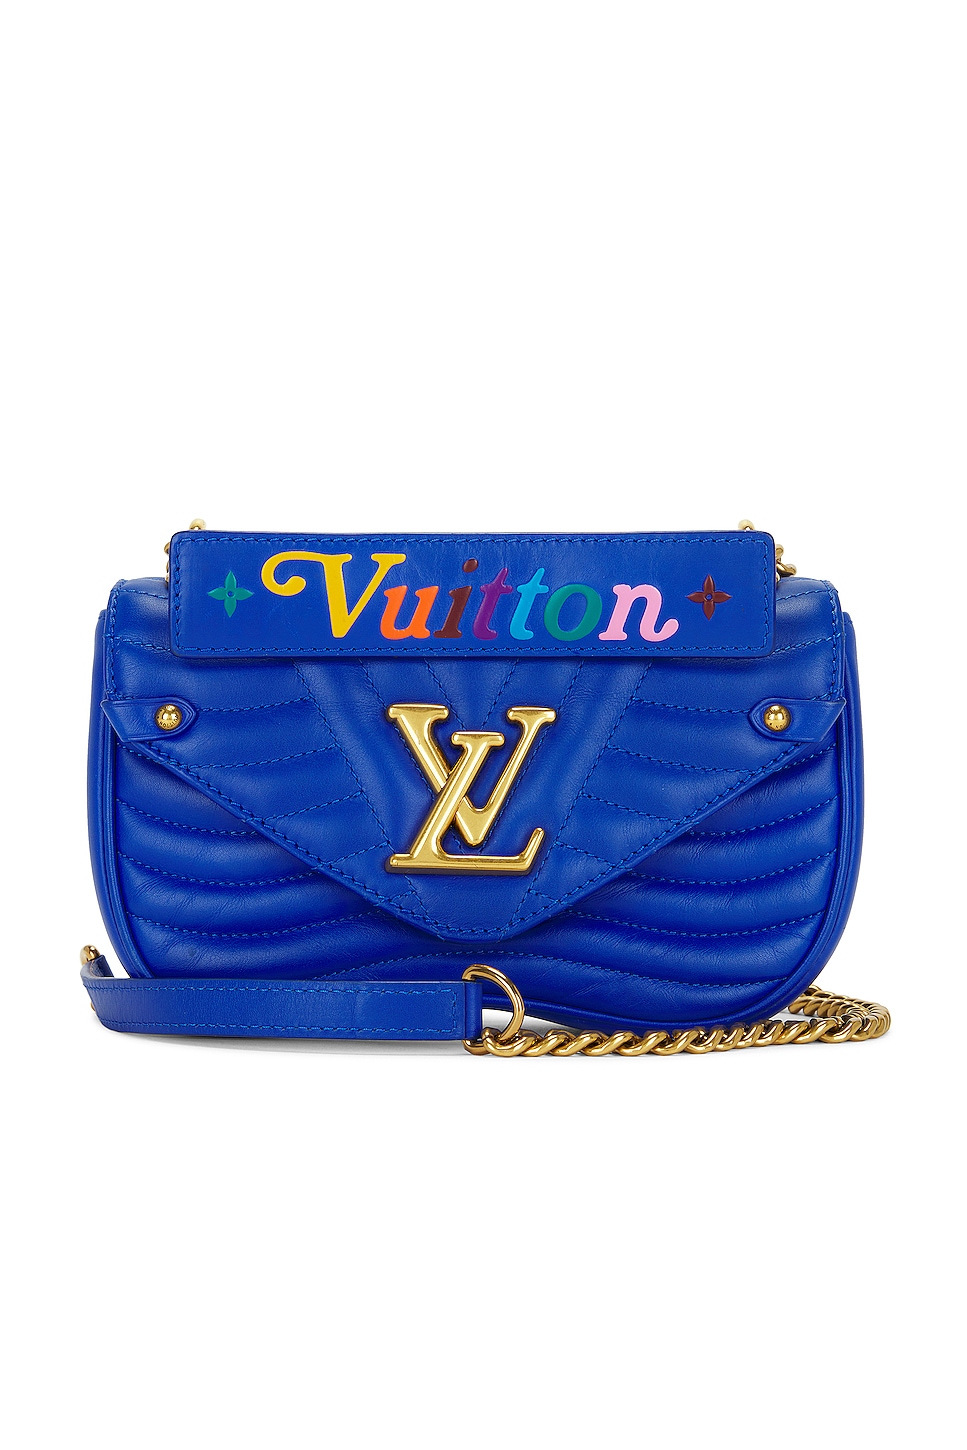 FWRD Renew Louis Vuitton New Wave Chain Shoulder Bag in Blue